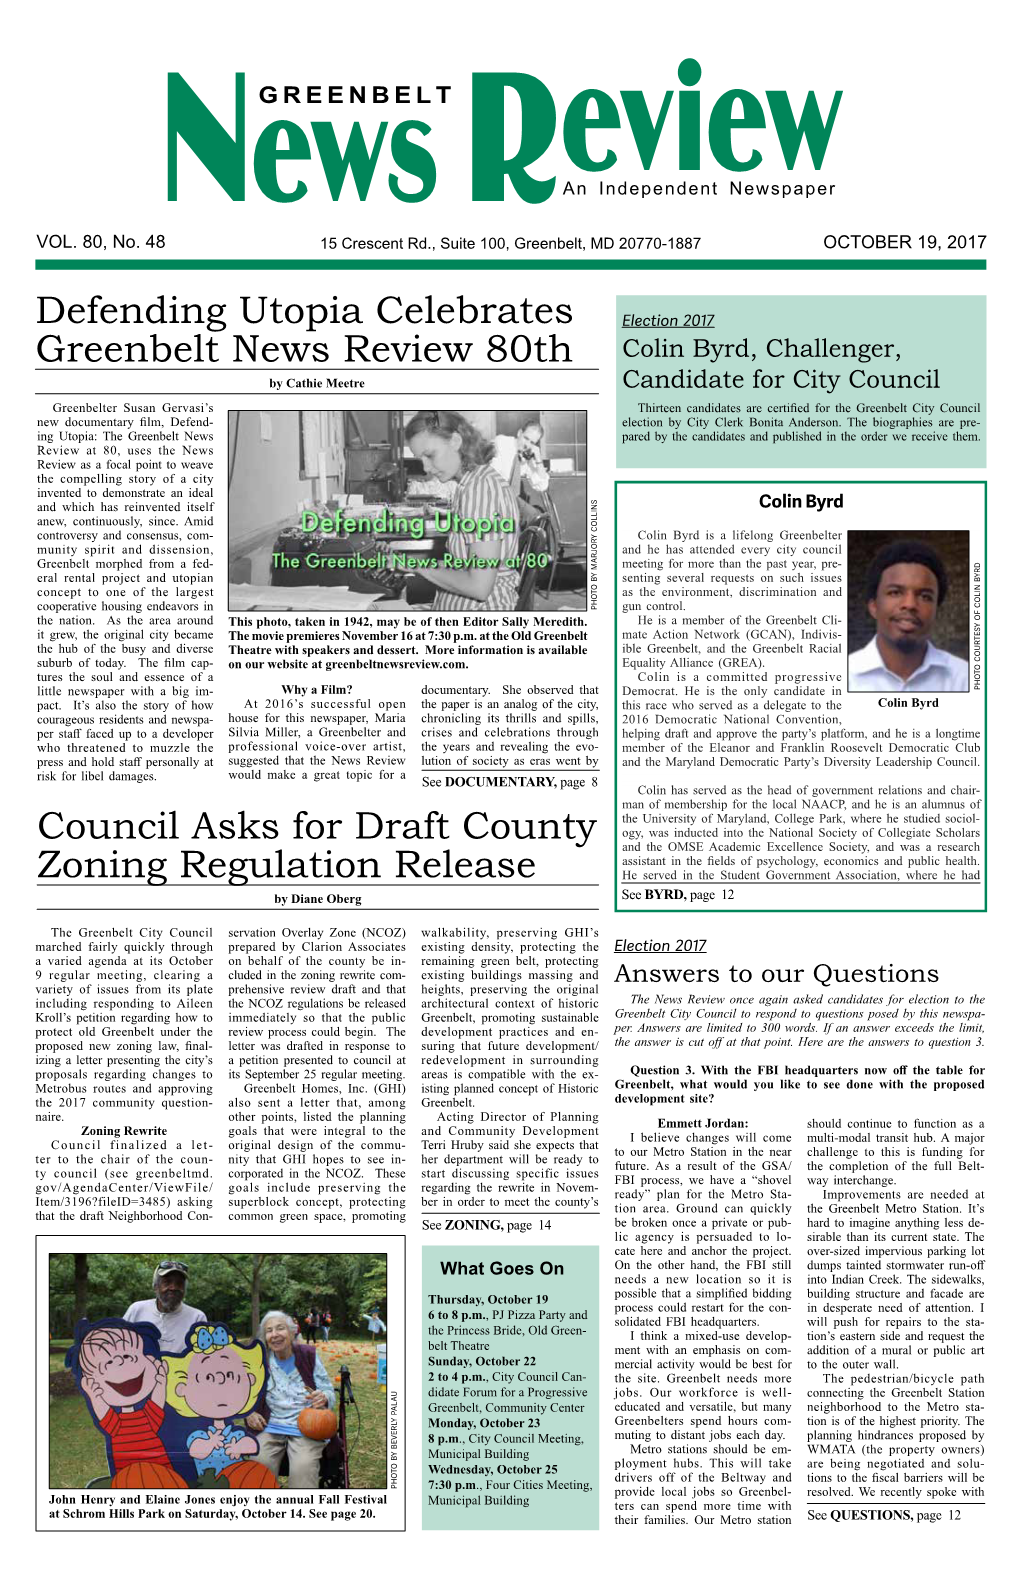 Defending Utopia Celebrates Greenbelt News Review 80Th Council